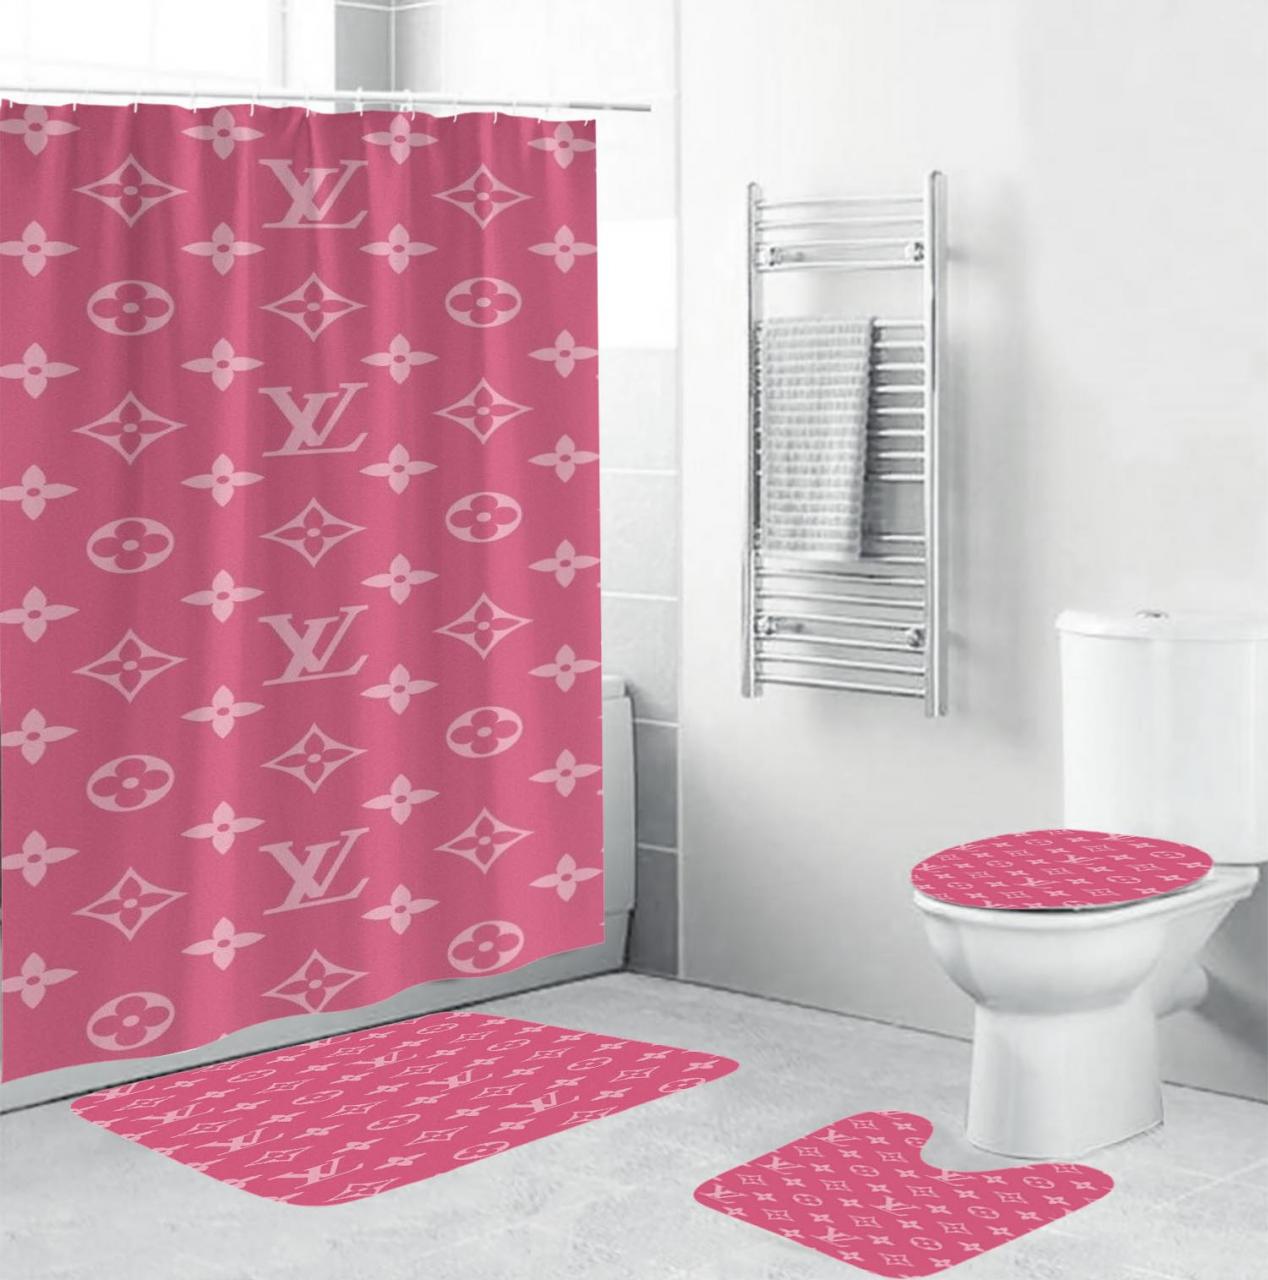 Louis Vuitton Monogram In Sand Pink Bathroom Set With Shower Curtain